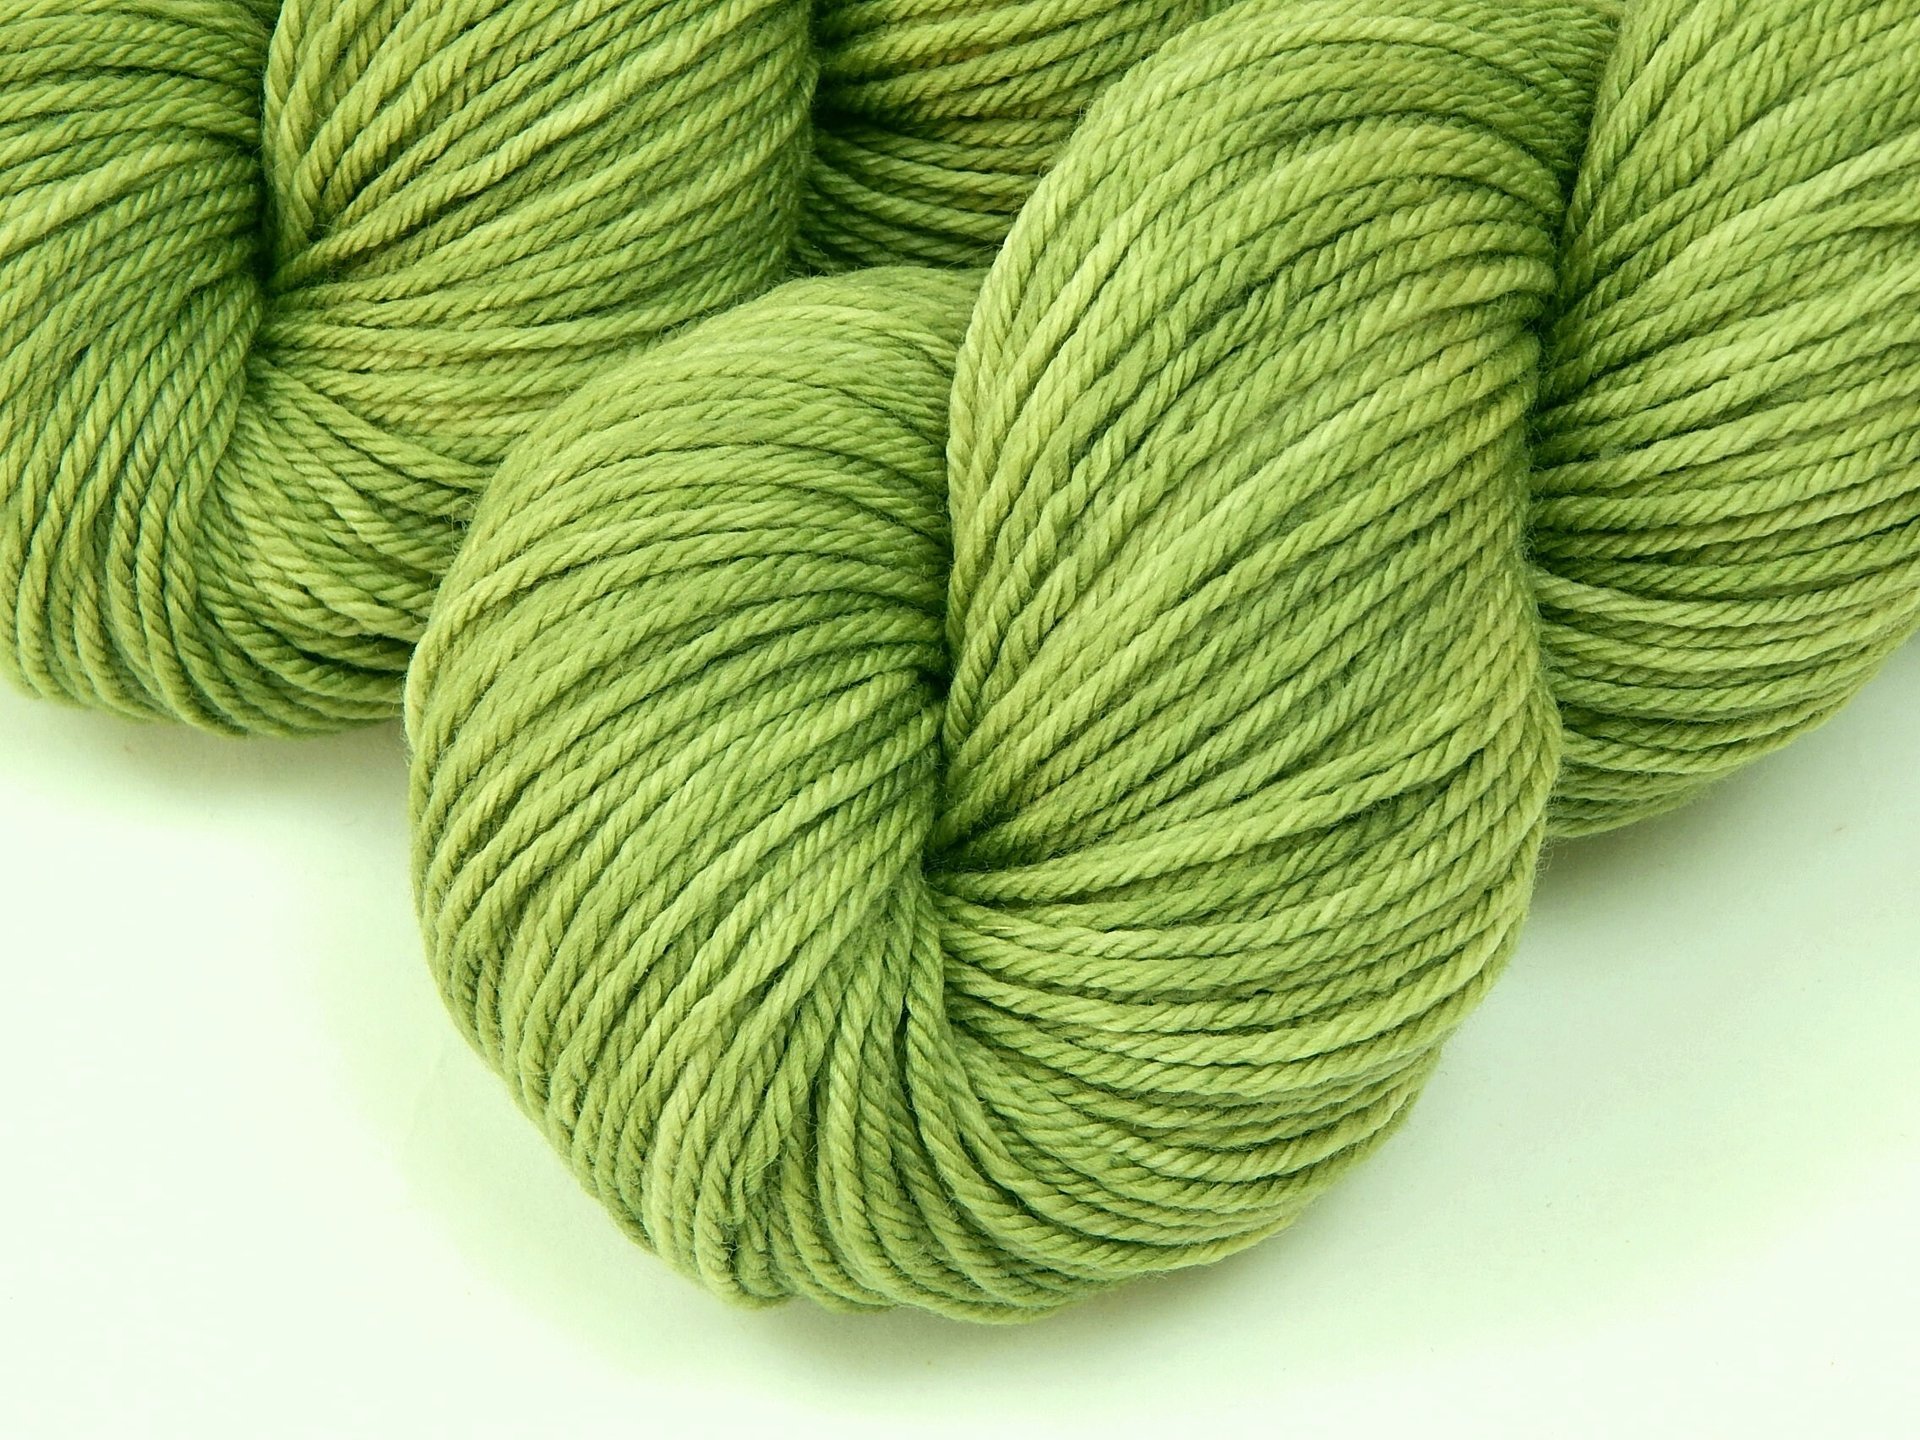 Worsted Weight Hand Dyed Yarn, 100% Superwash Merino Wool - Green Tea - Indie Dyer Sage Olive Green Knitting Yarn, Soft Semi Solid Crochet